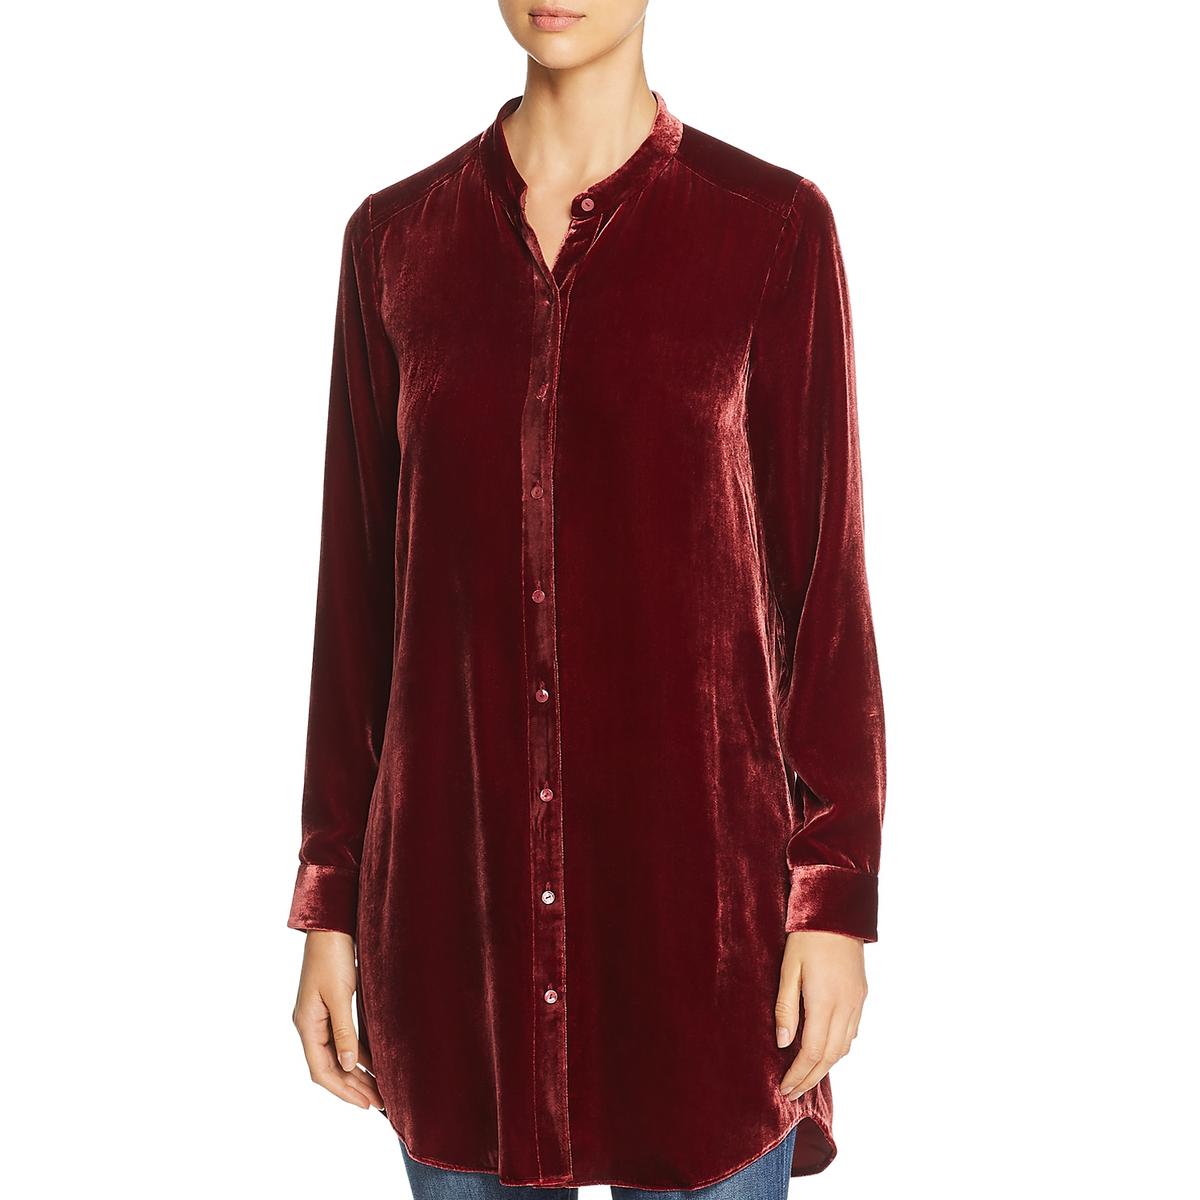 Eileen Fisher Womens Red Velvet Mandarin Collar Tunic Top Shirt M BHFO 1907 | eBay